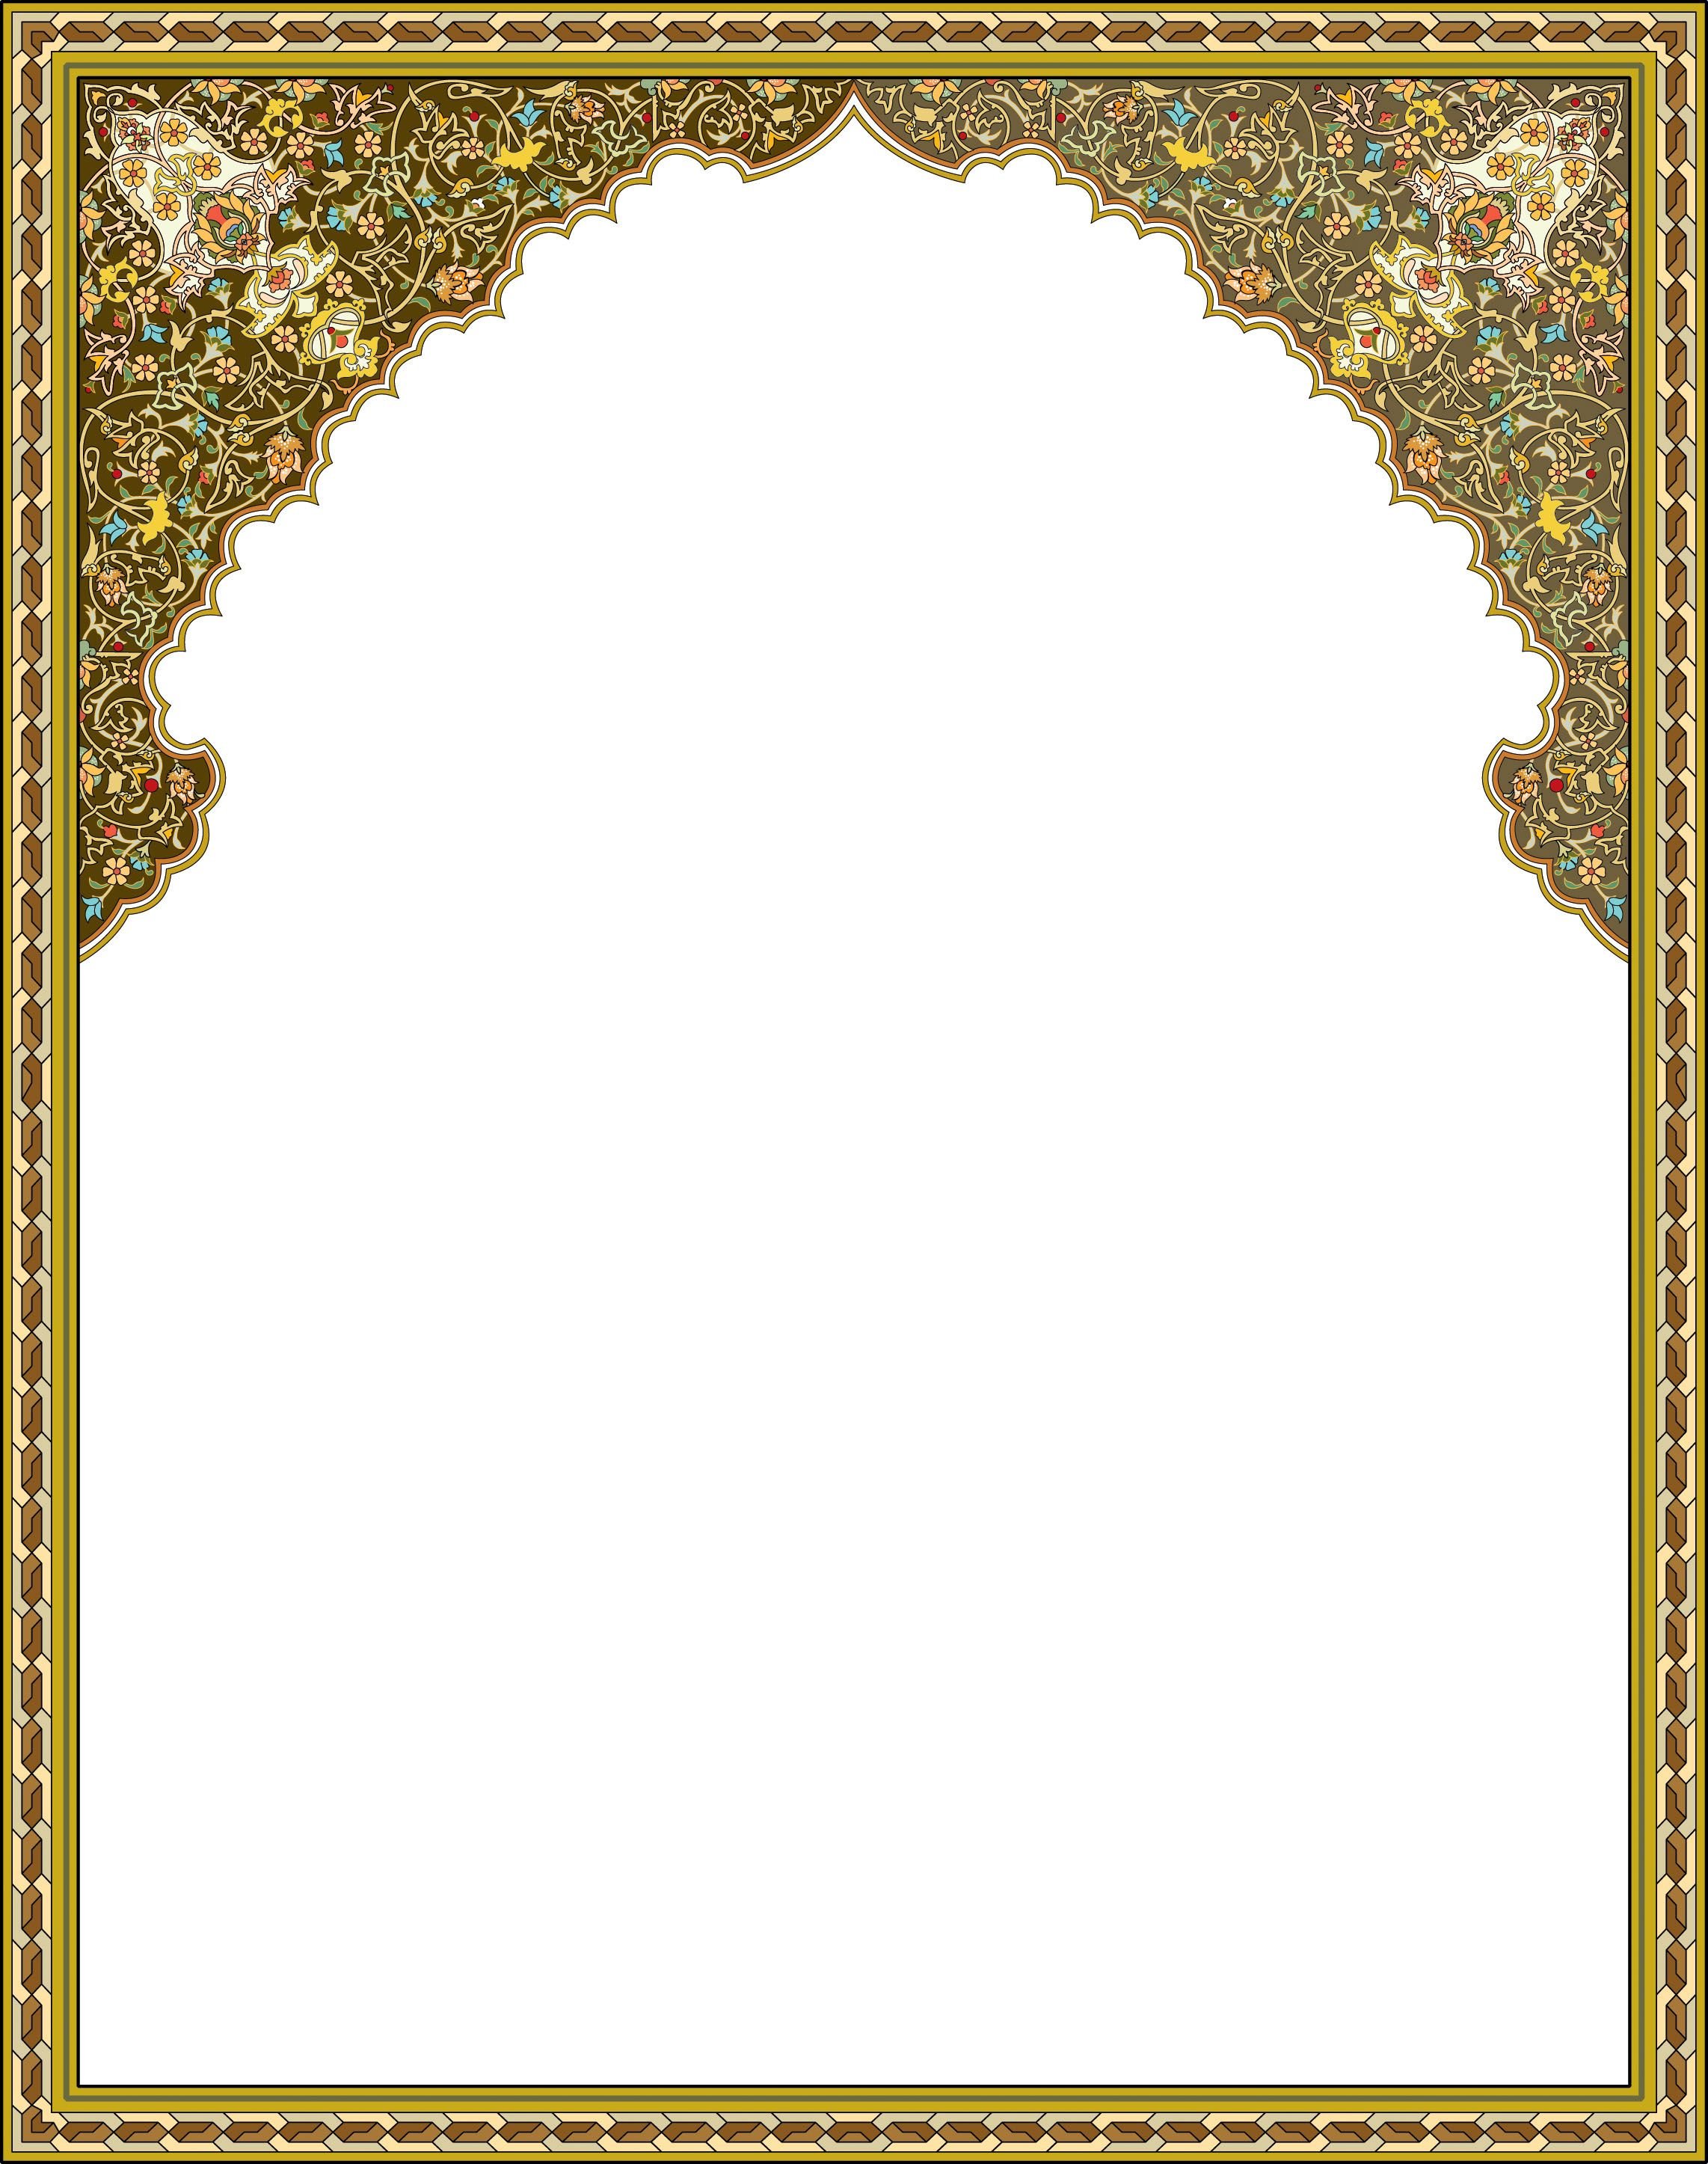 Мусульманские рамки. Рамки в арабском стиле. Рамки в стиле Востока. Восточный орнамент рамка. Рамка церковная.